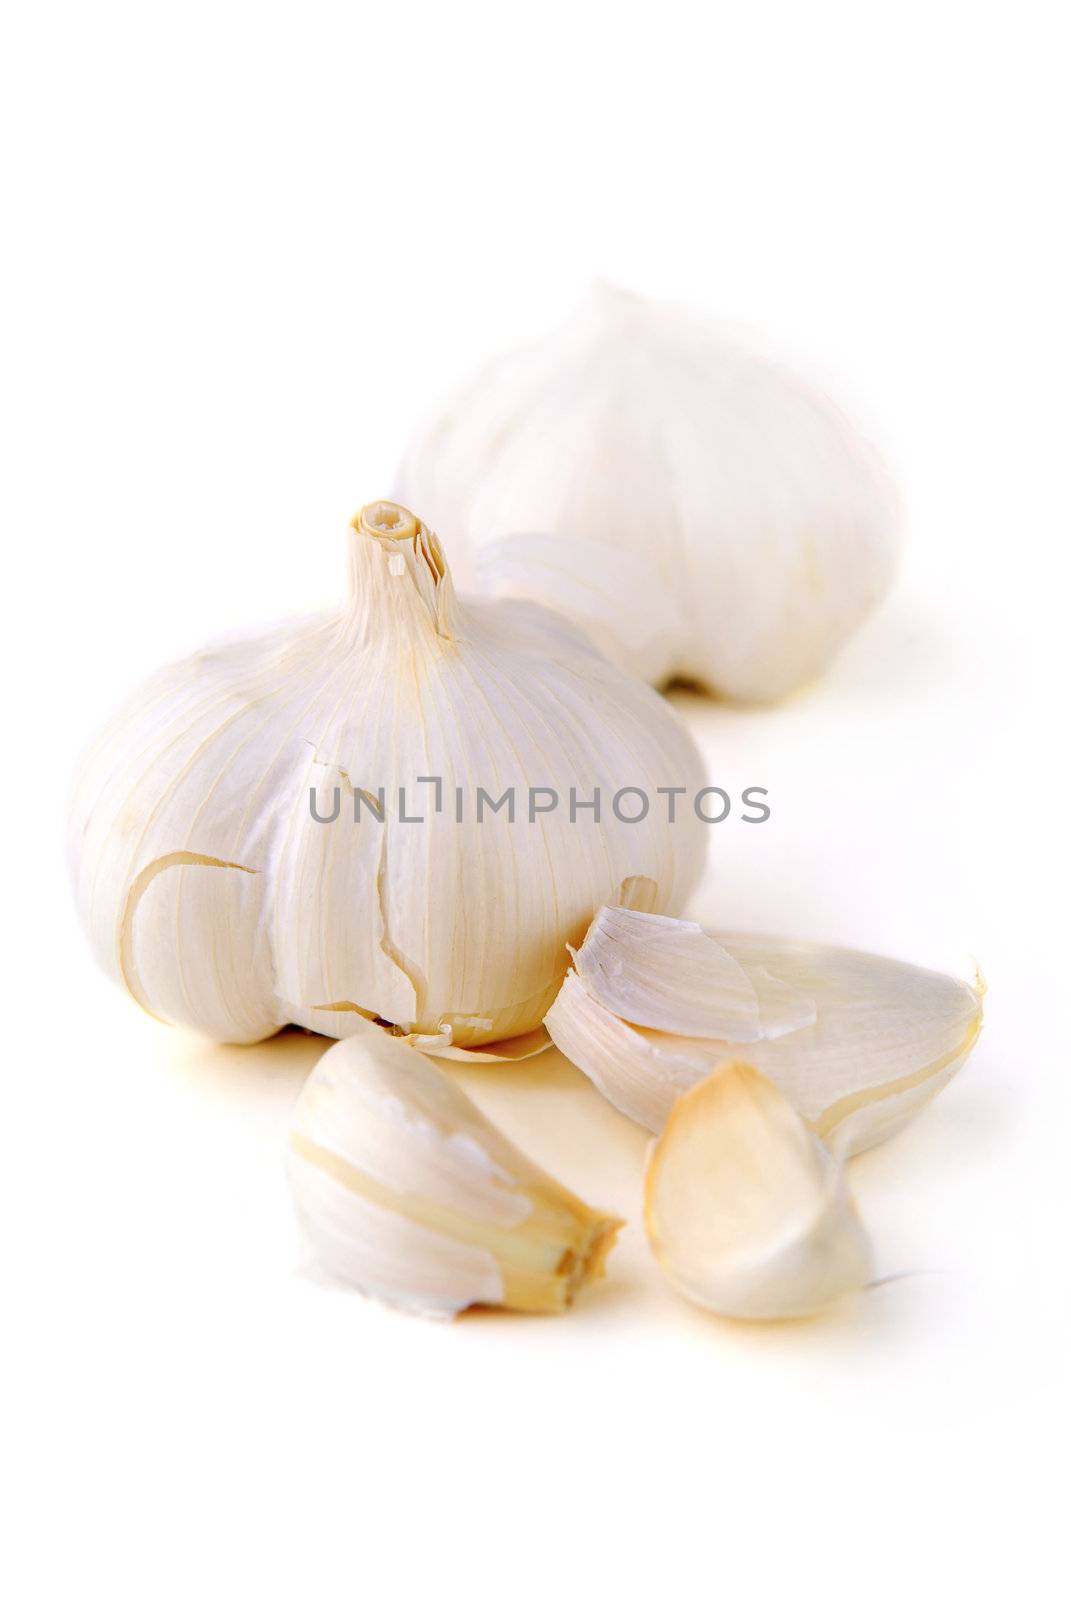 Garlic by elenathewise